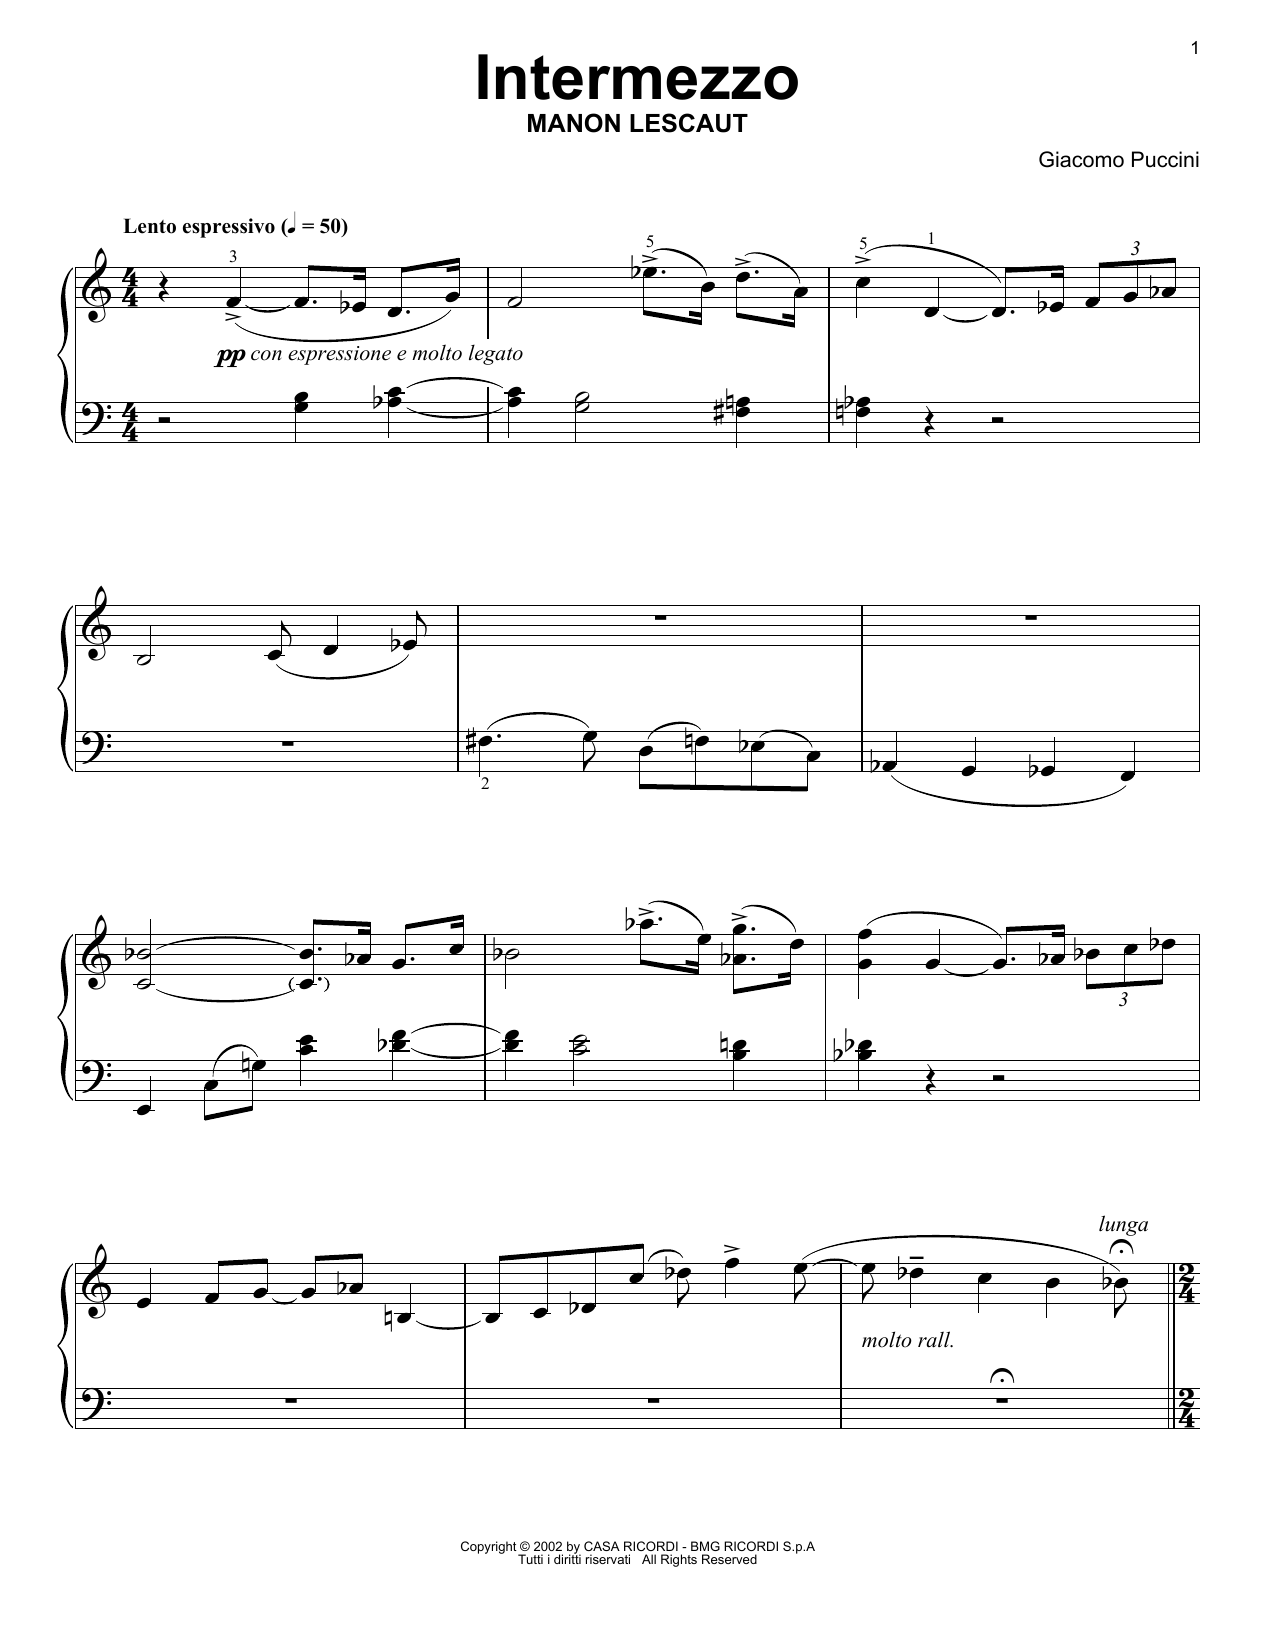 Giacomo Puccini Intermezzo Sheet Music Notes & Chords for Piano Solo - Download or Print PDF